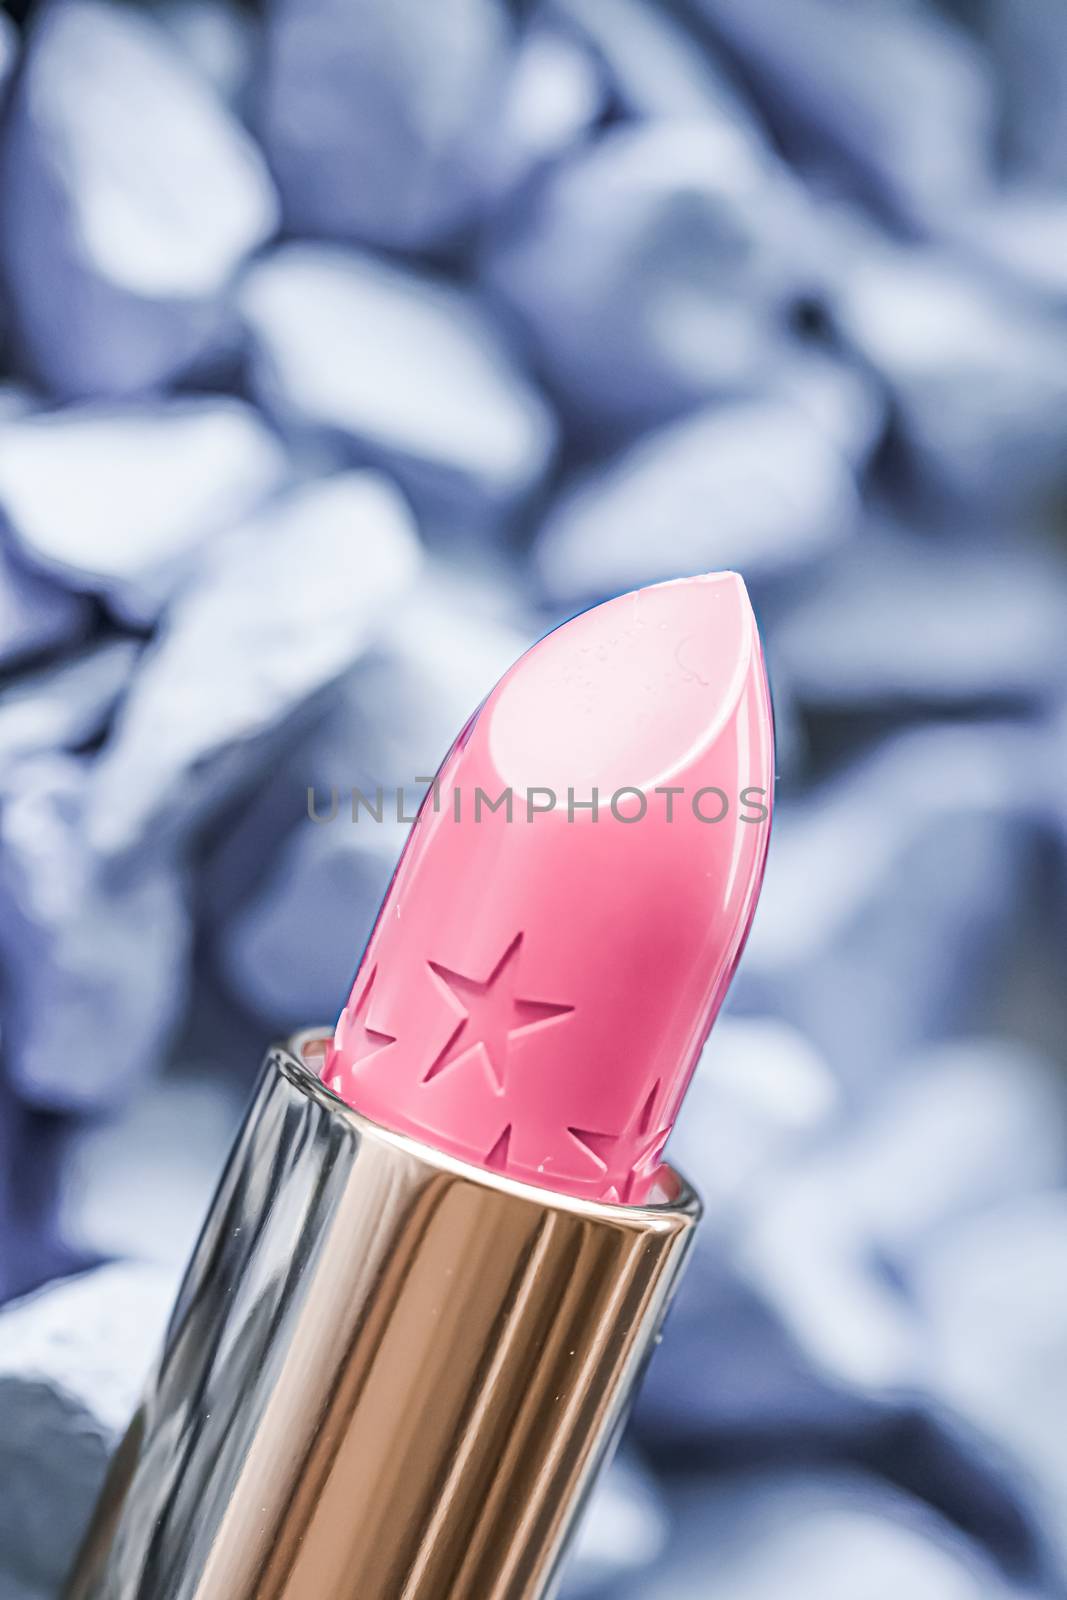 Red lipstick closeup, luxury make-up and beauty cosmetics